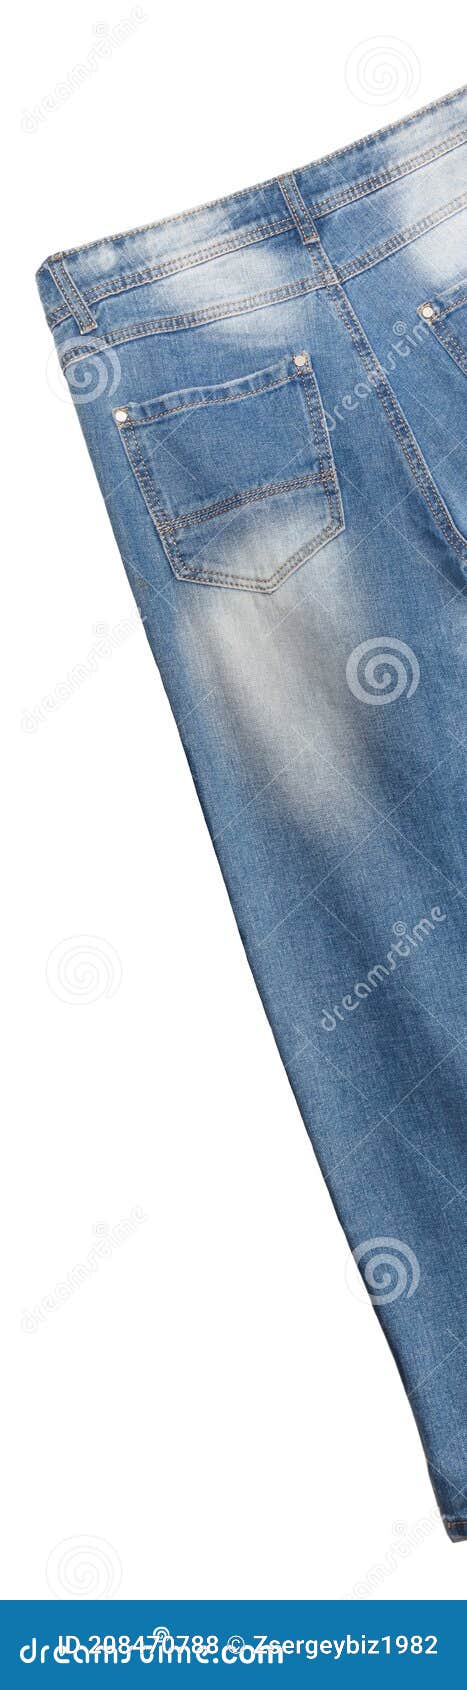 Monki wide leg cropped jeans in blue dot print | ASOS